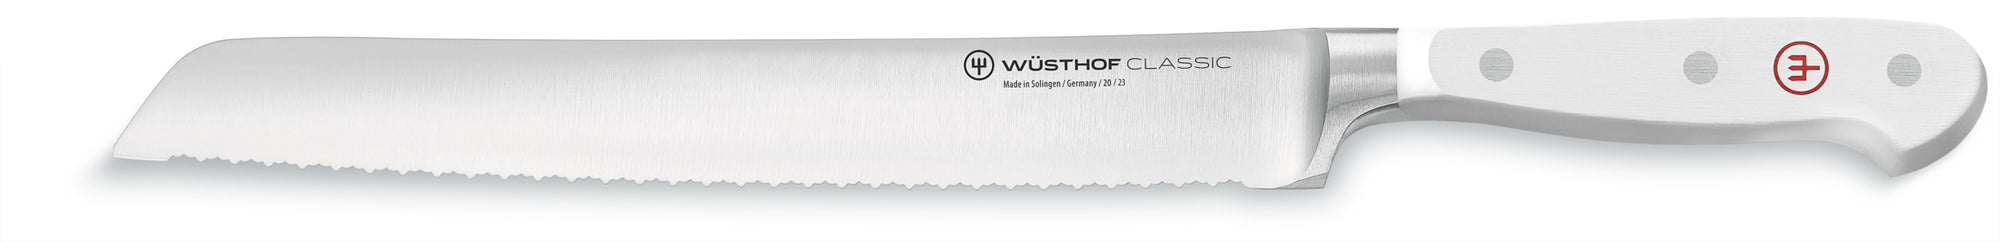 Wusthof Classic White Bread Knife Canada 1040201123